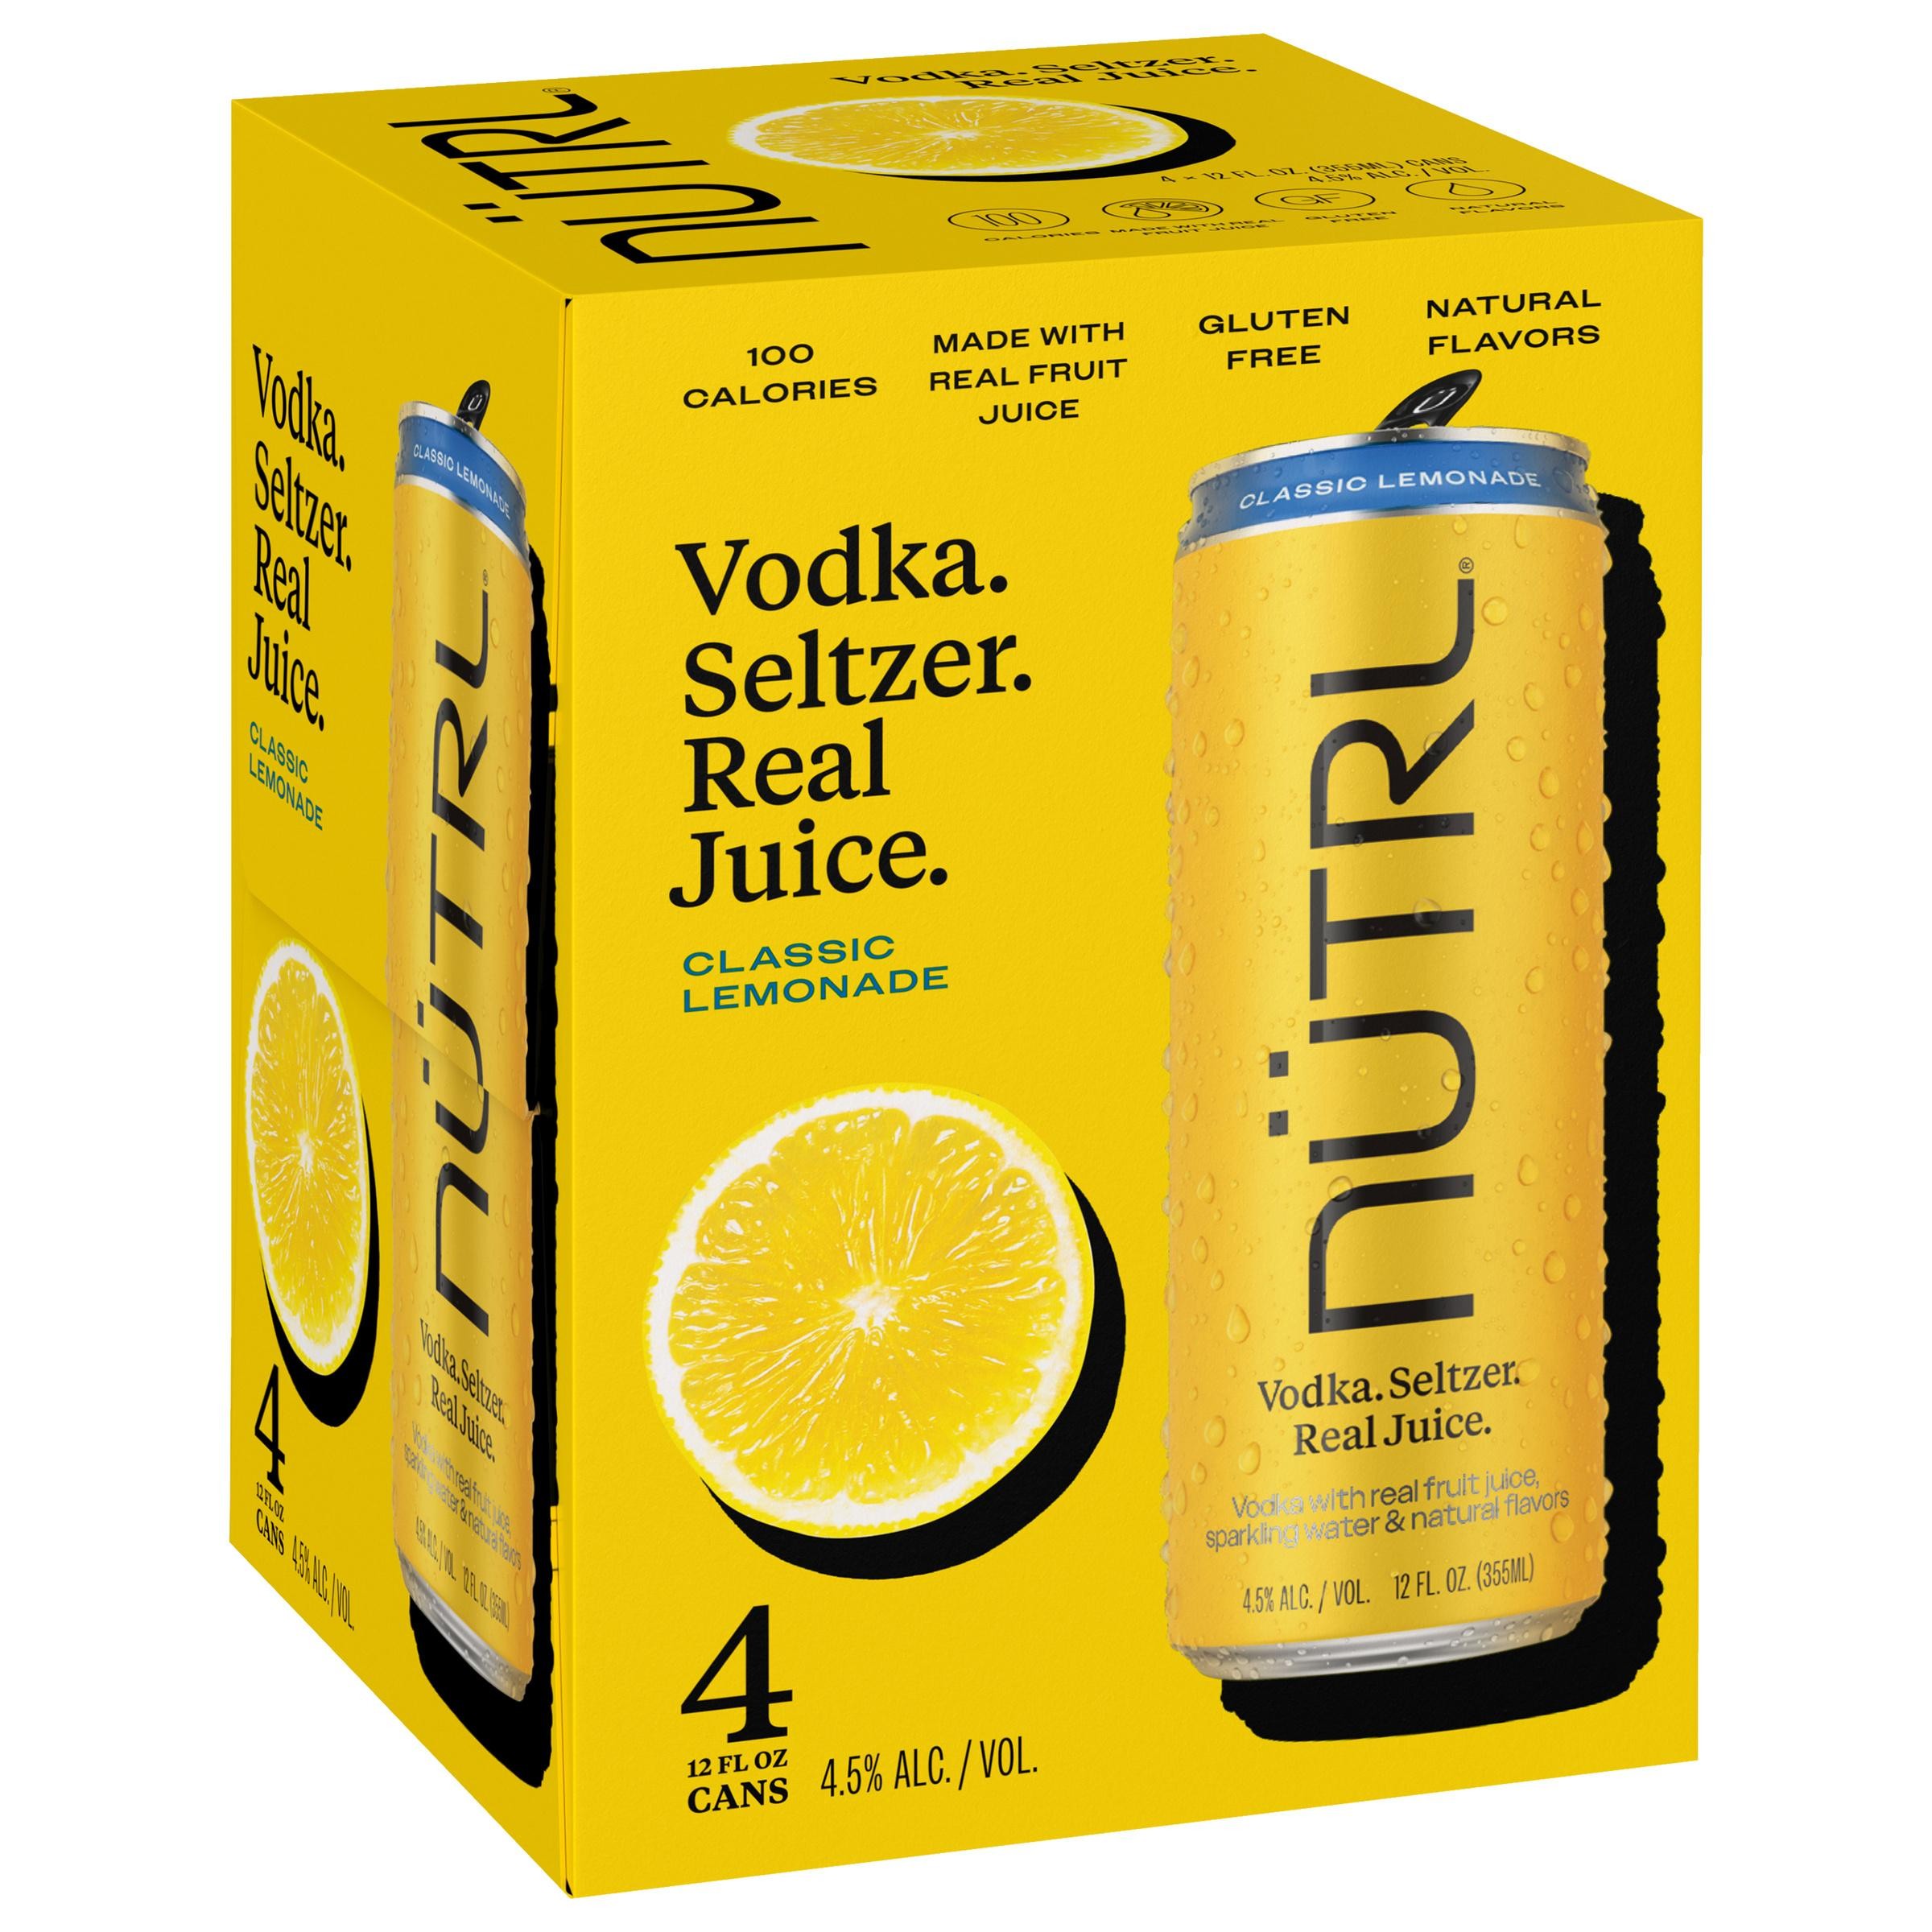 NUTRL Classic Vodka Lemonade Seltzer Ready-to-drink - 4x 12oz Cans